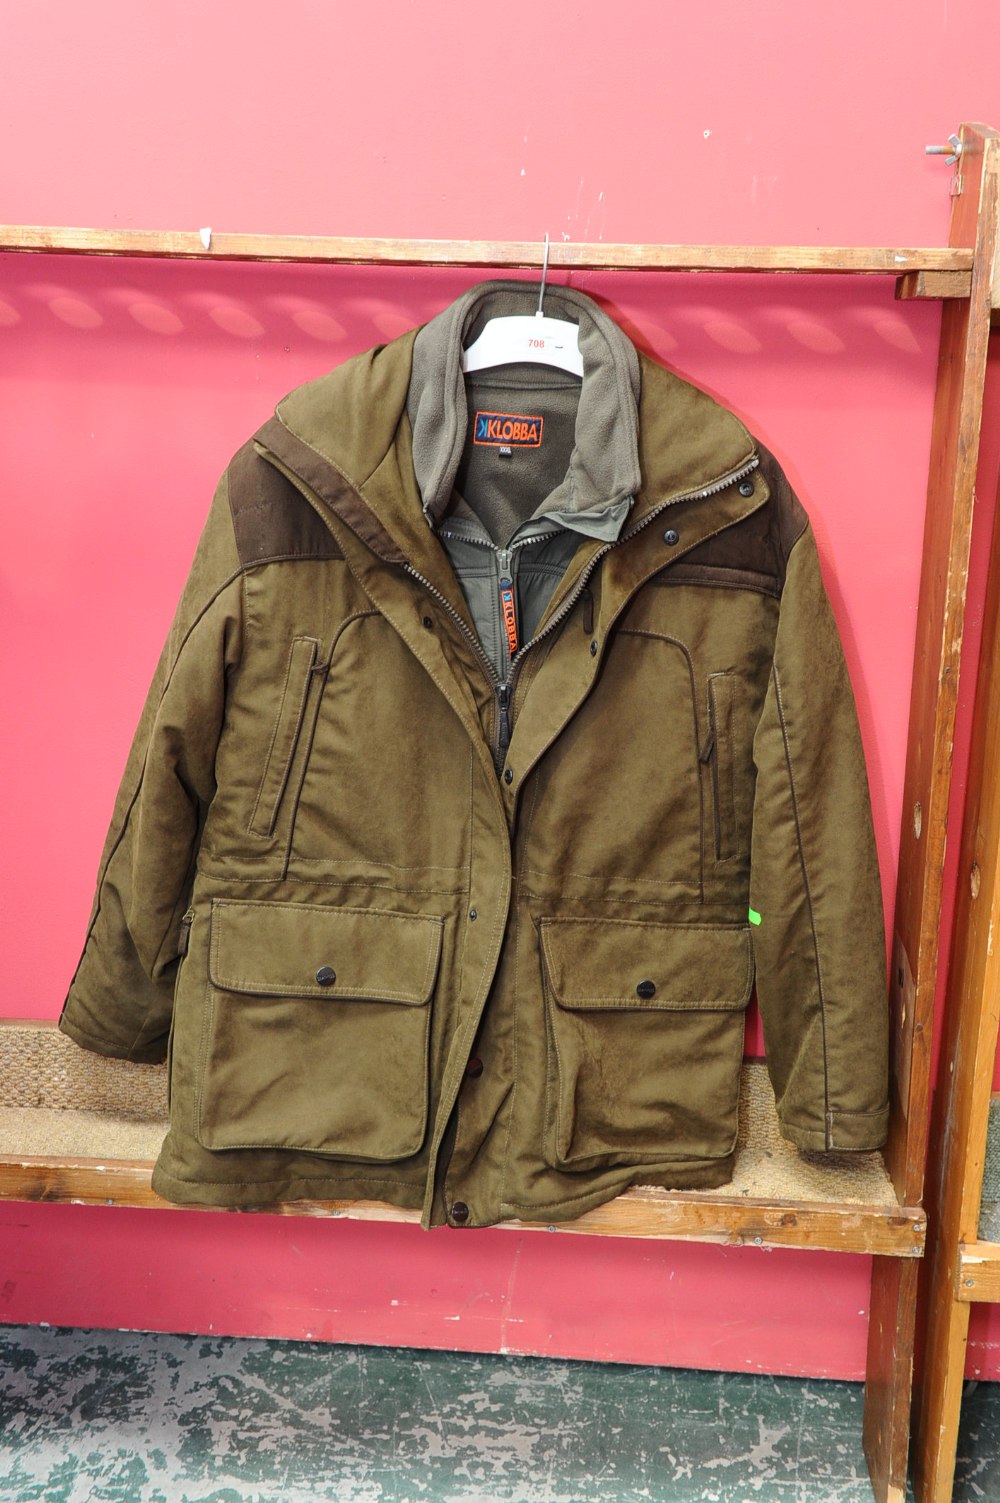 Klobba shooting jacket with separate fleece/waterproof lining and suede-finish shooting jacket in